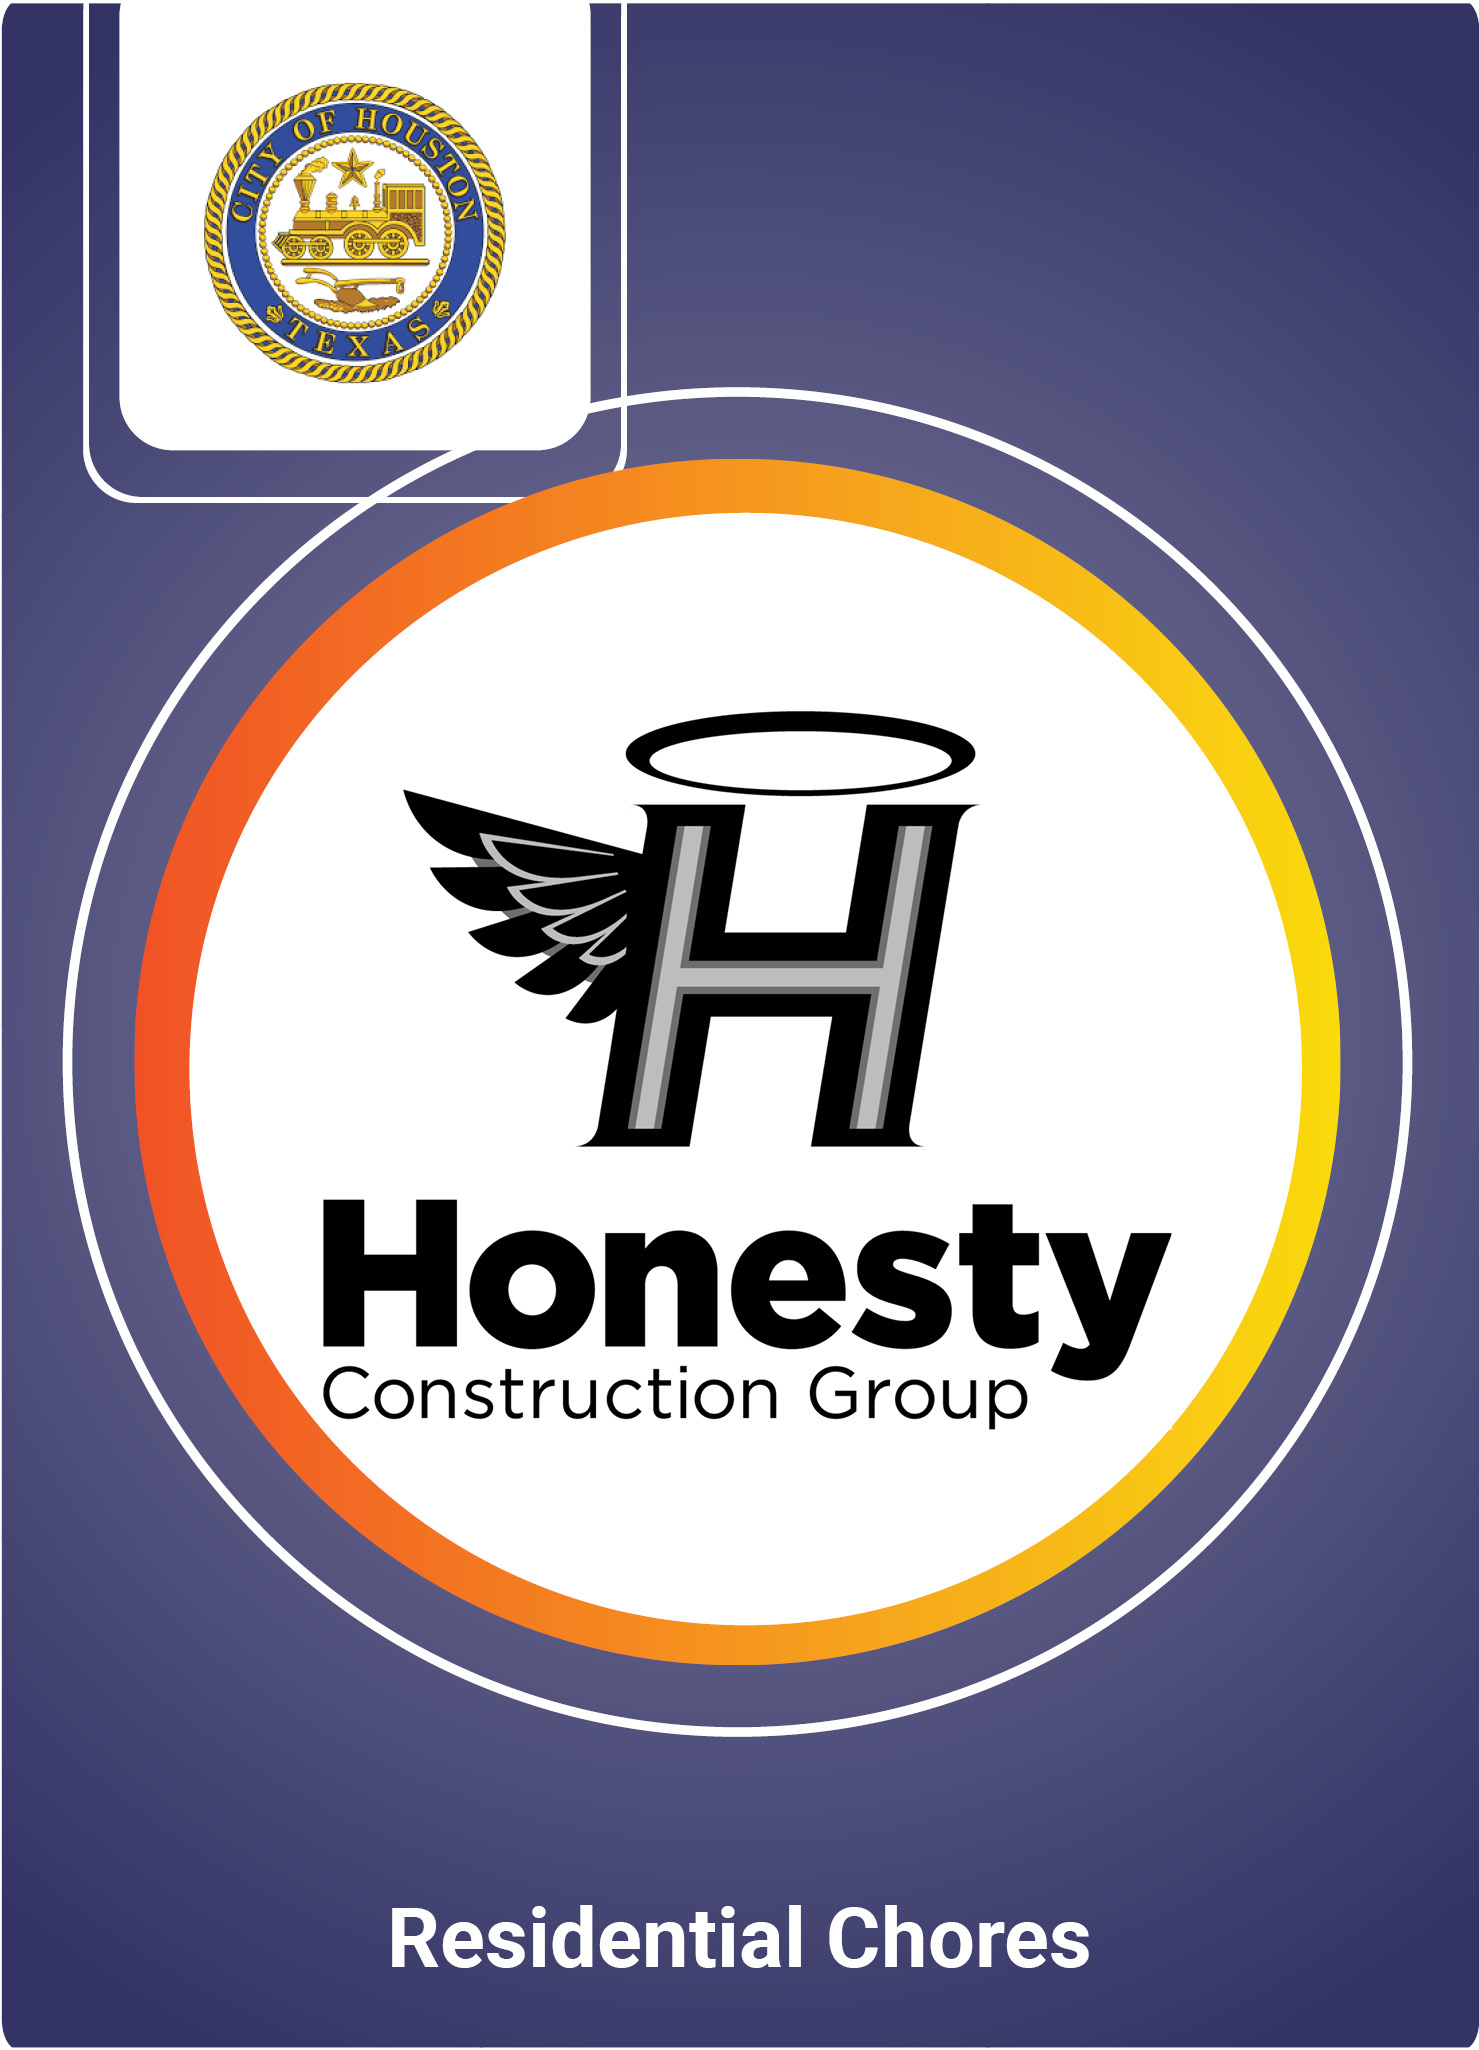 Honesty Construction Group logo